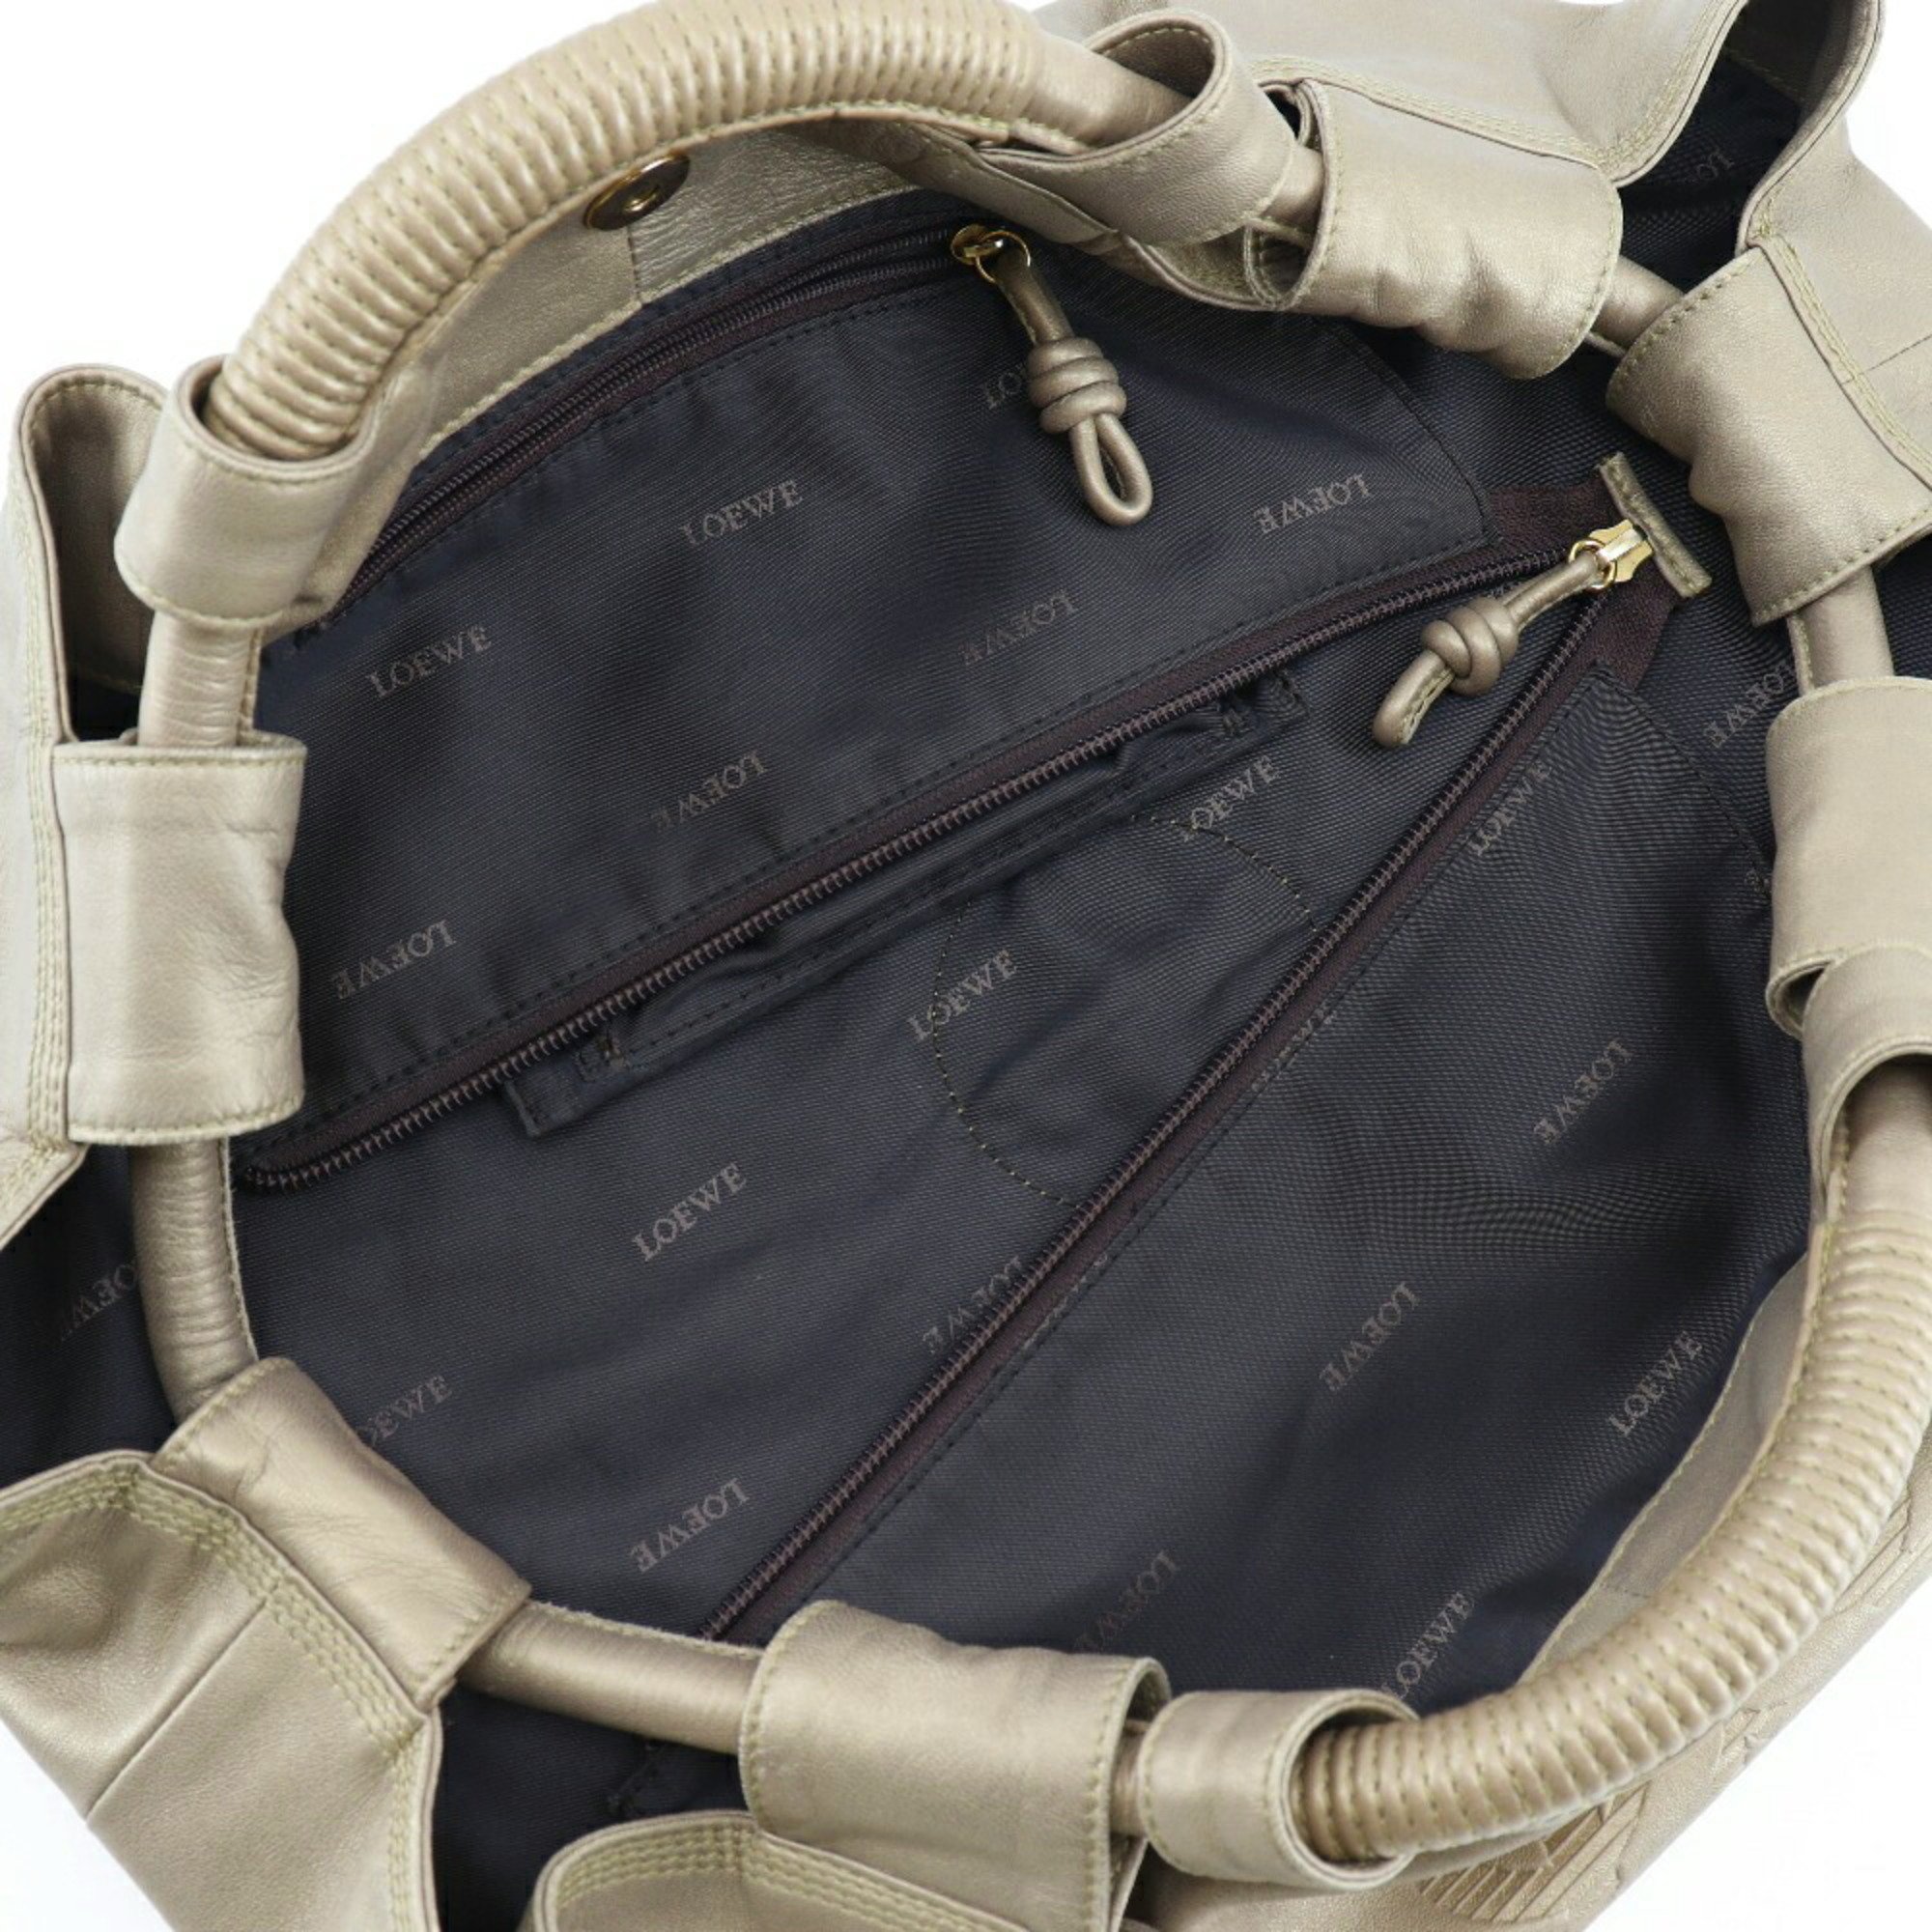 LOEWE Nappa Aire Handbag, Lambskin, Type A5, Women's, I131824145